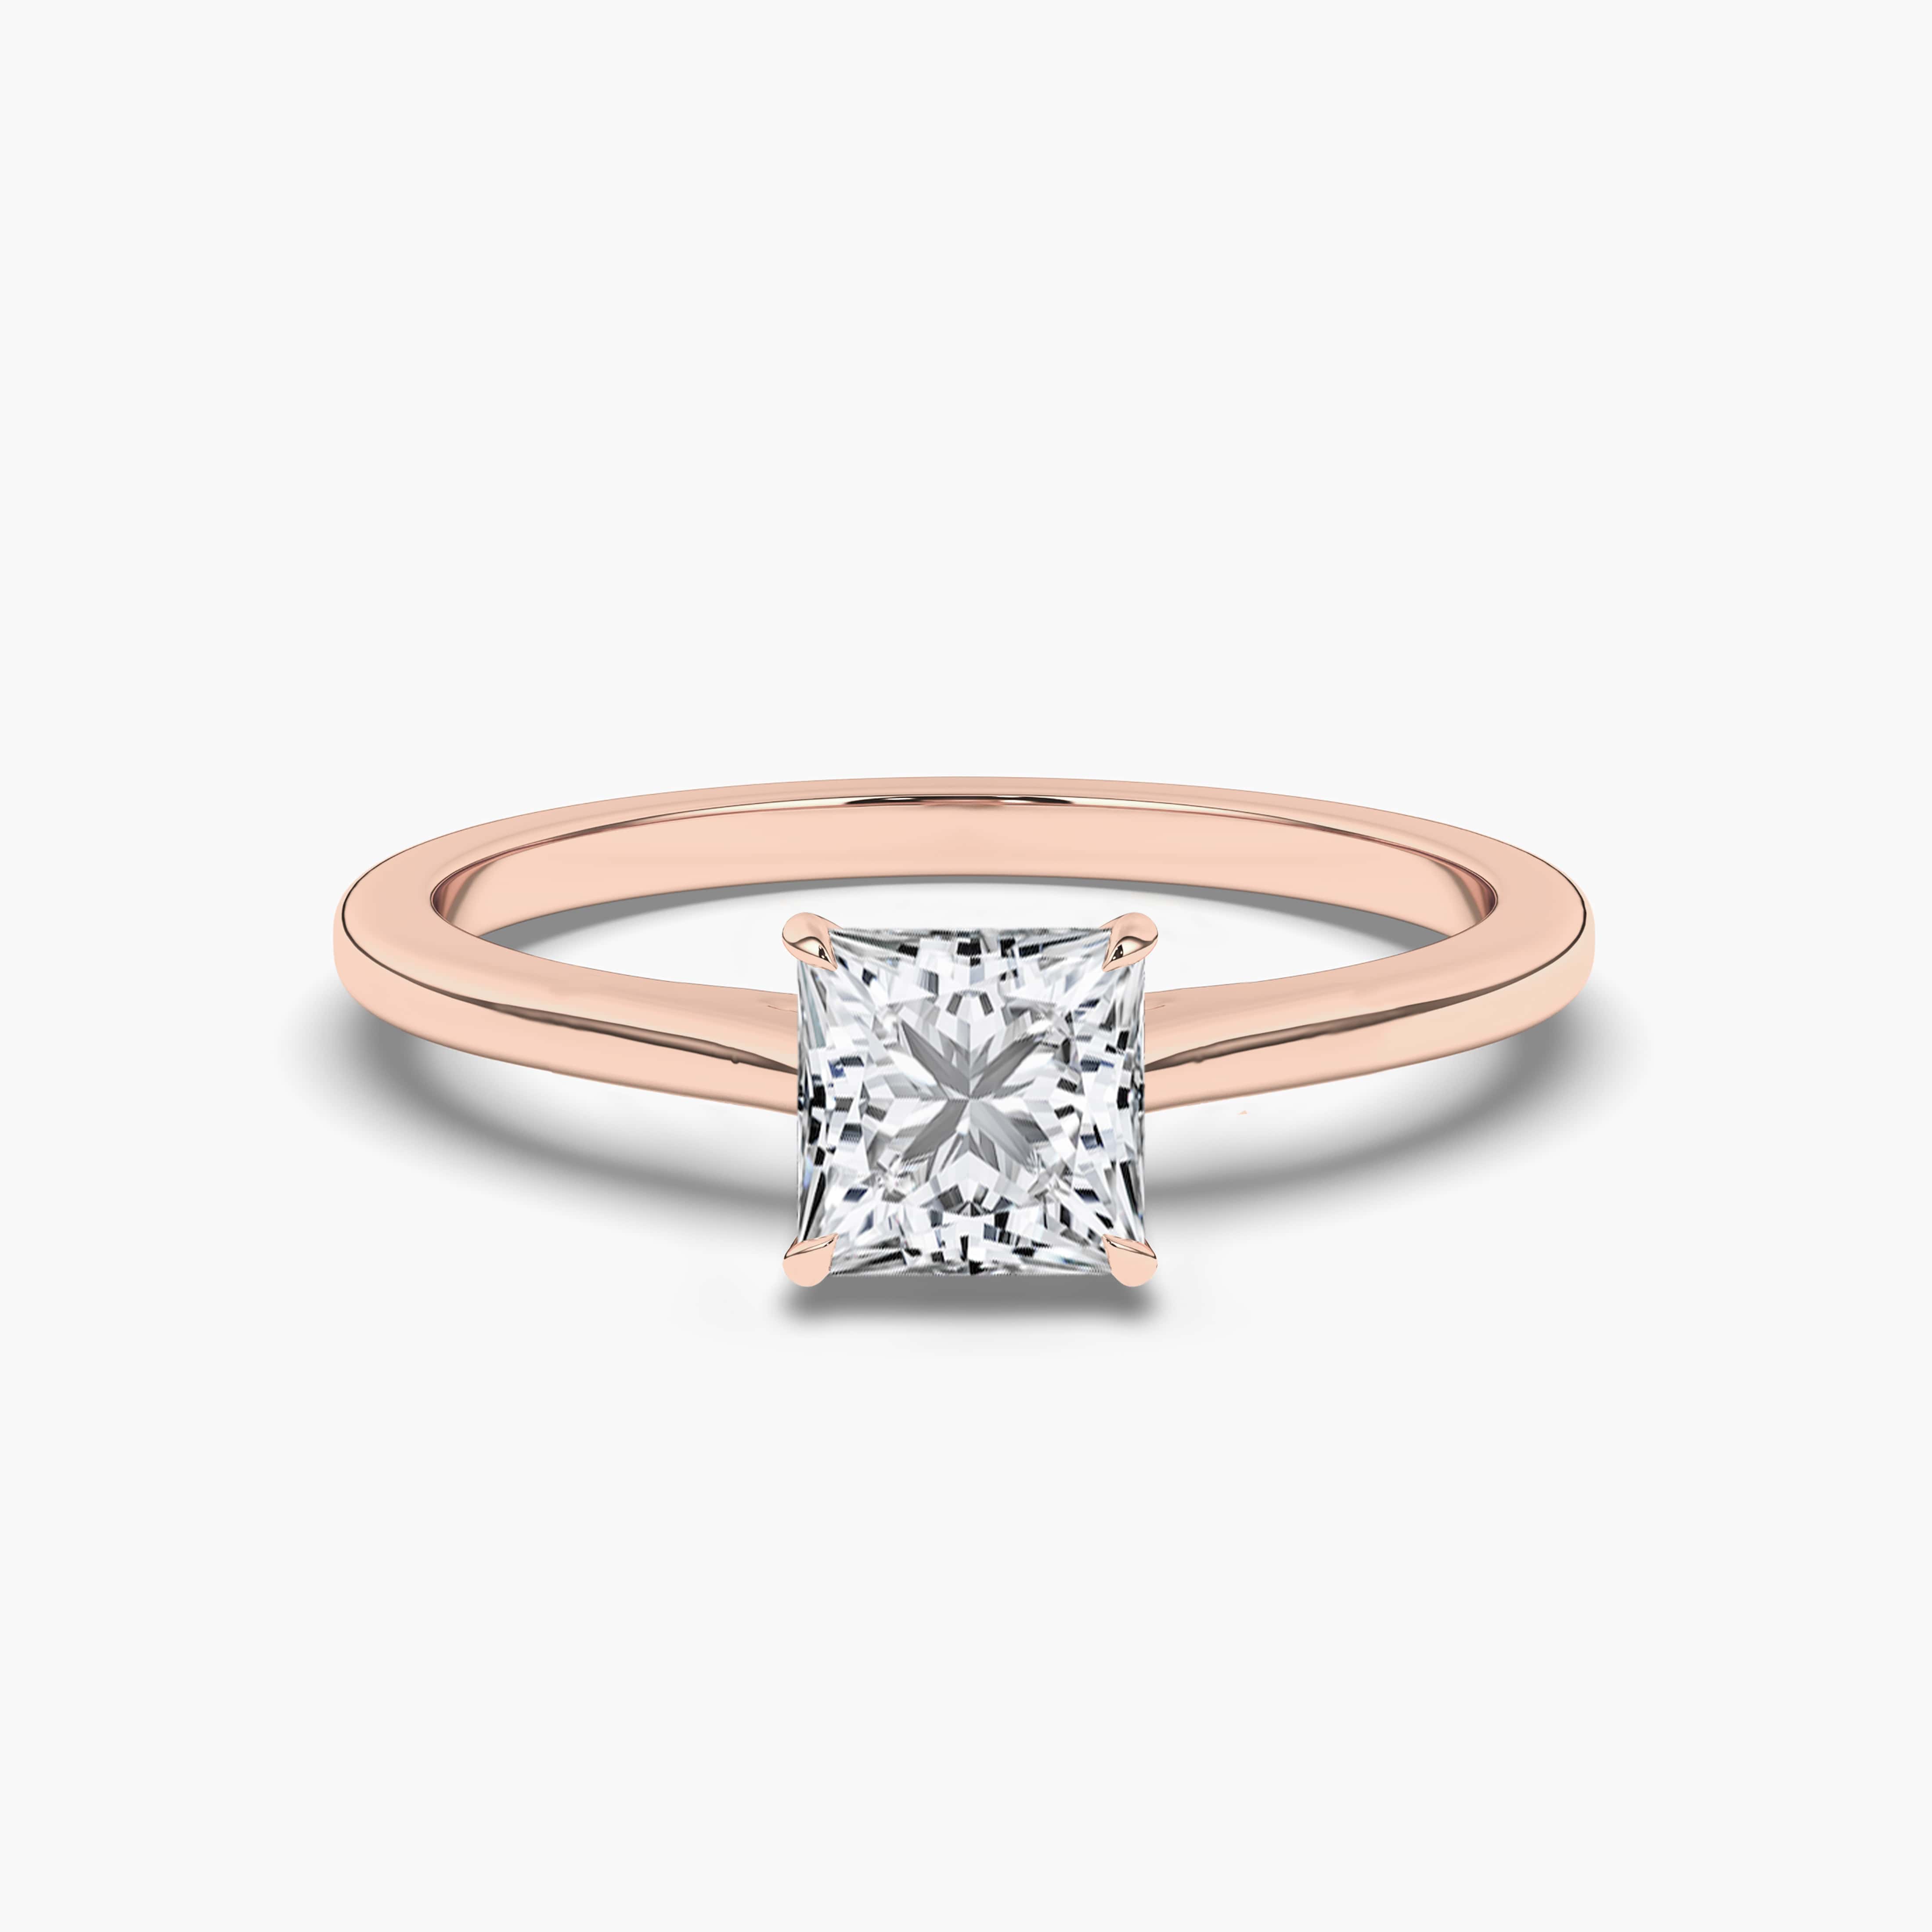 Princess Cut Diamond Engagement Ring 